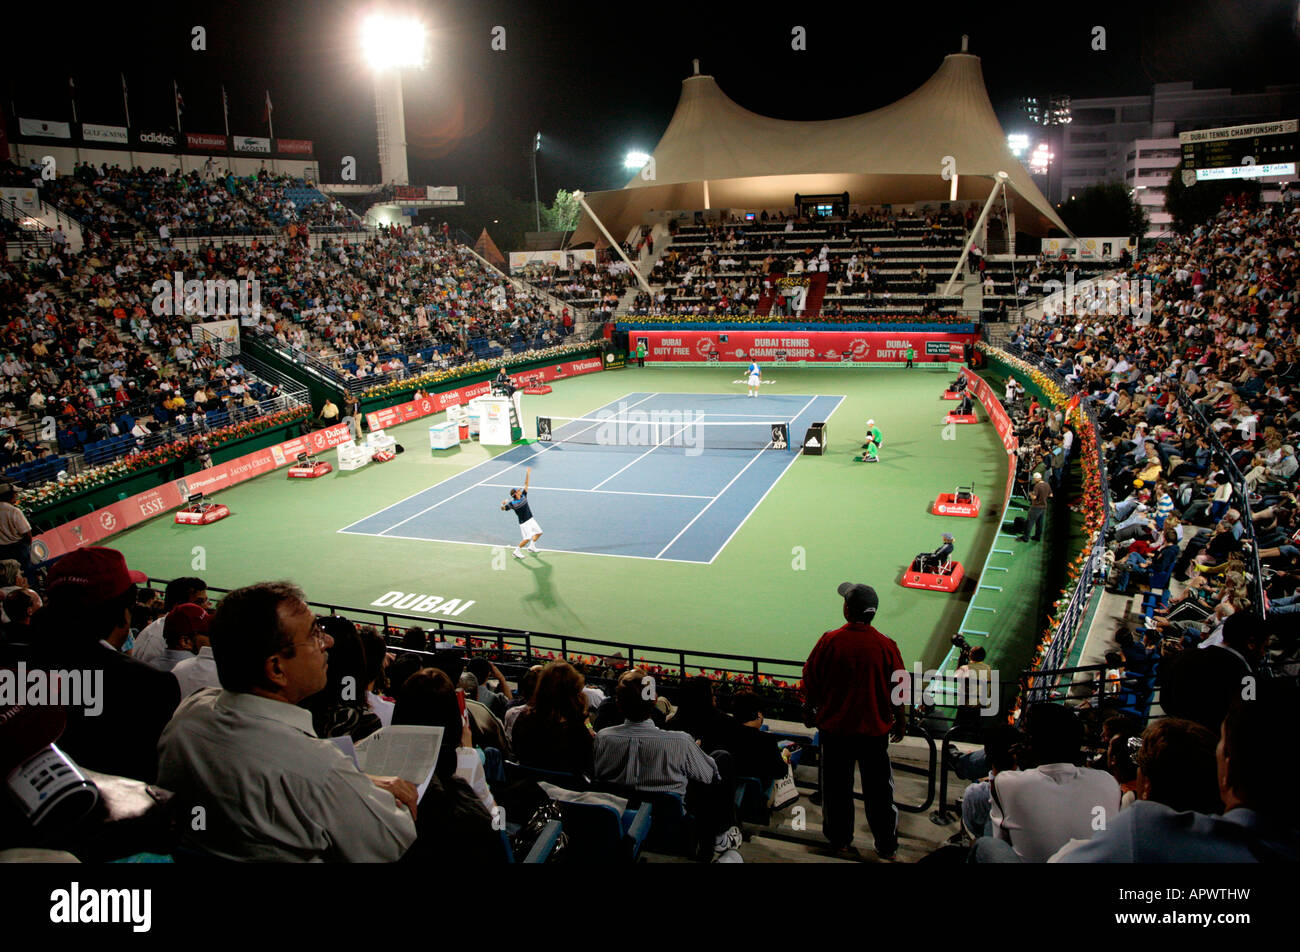 Dubai Tennis Stadium at Night during the ATP tennis tournament Stock Photo 